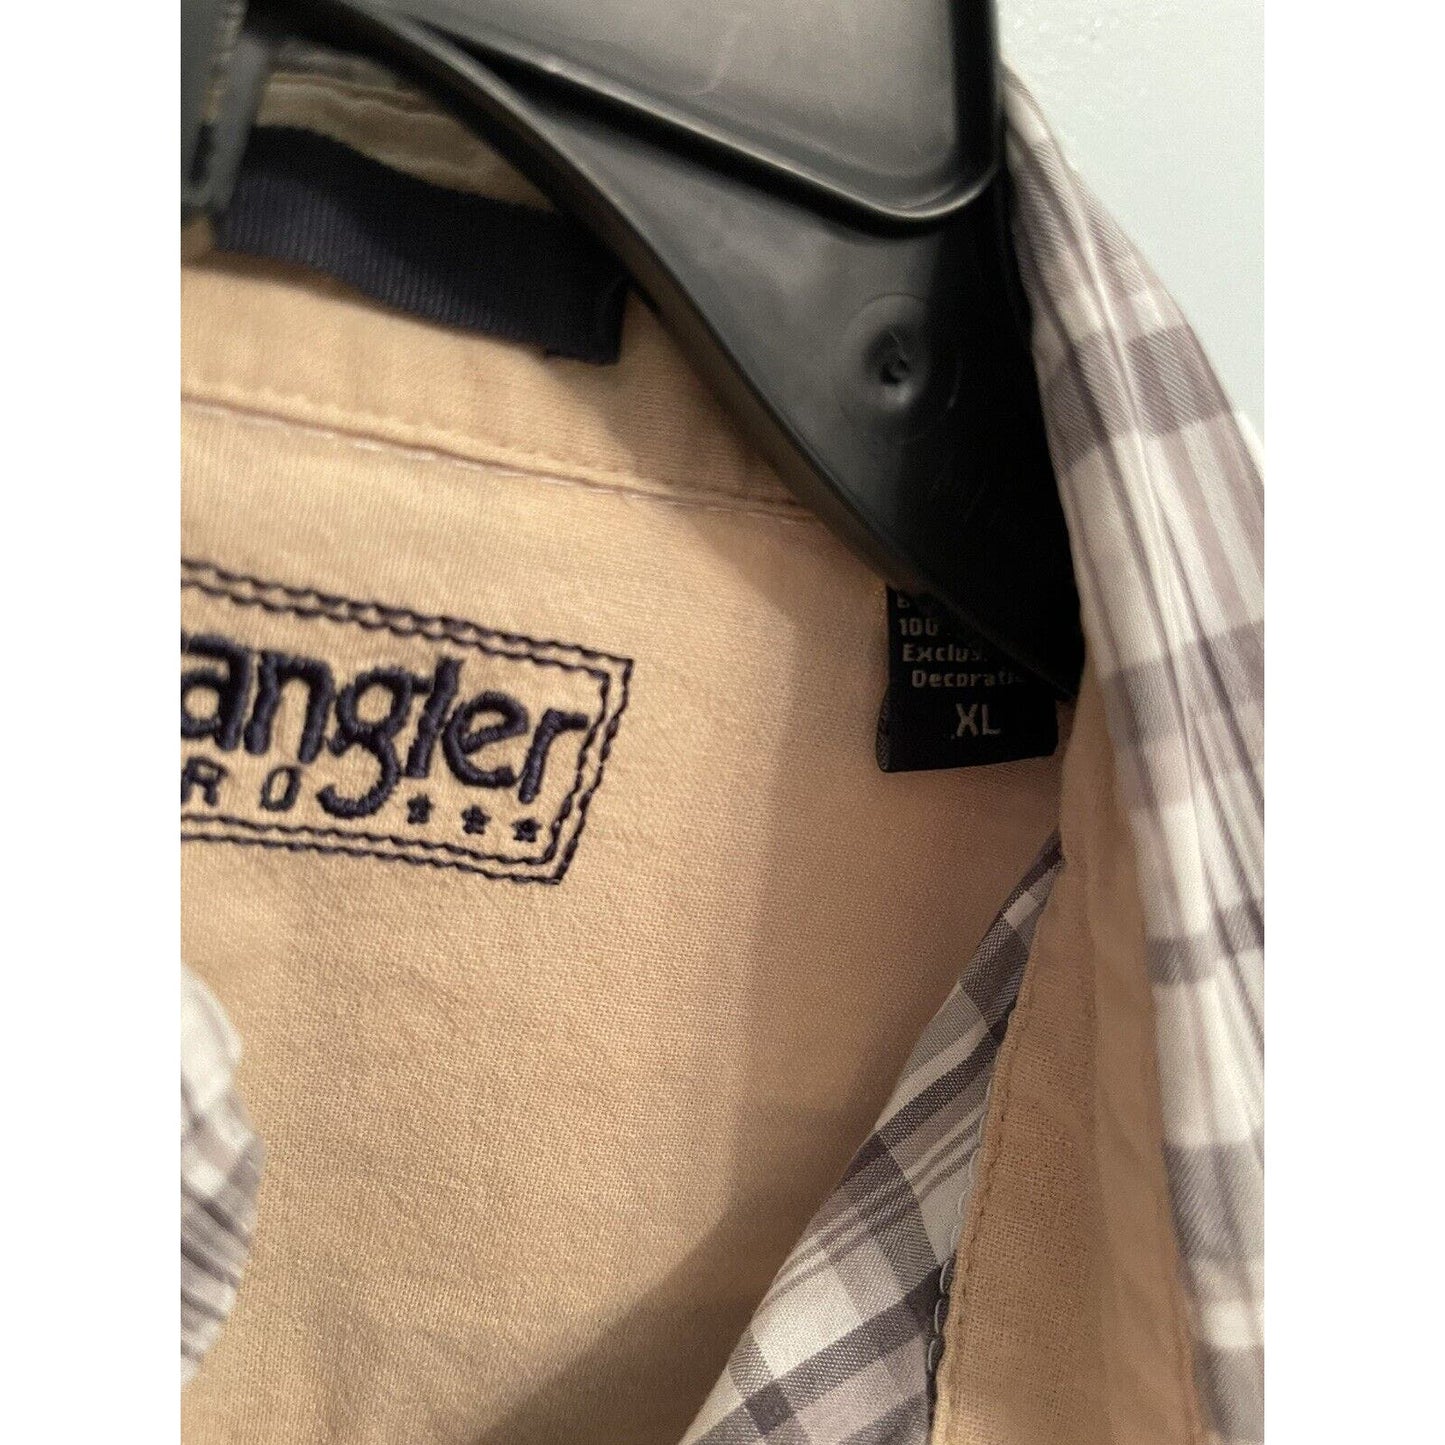 Wrangler Hero Men's XL Button Up Short Sleeve Plaid Collared Shirt